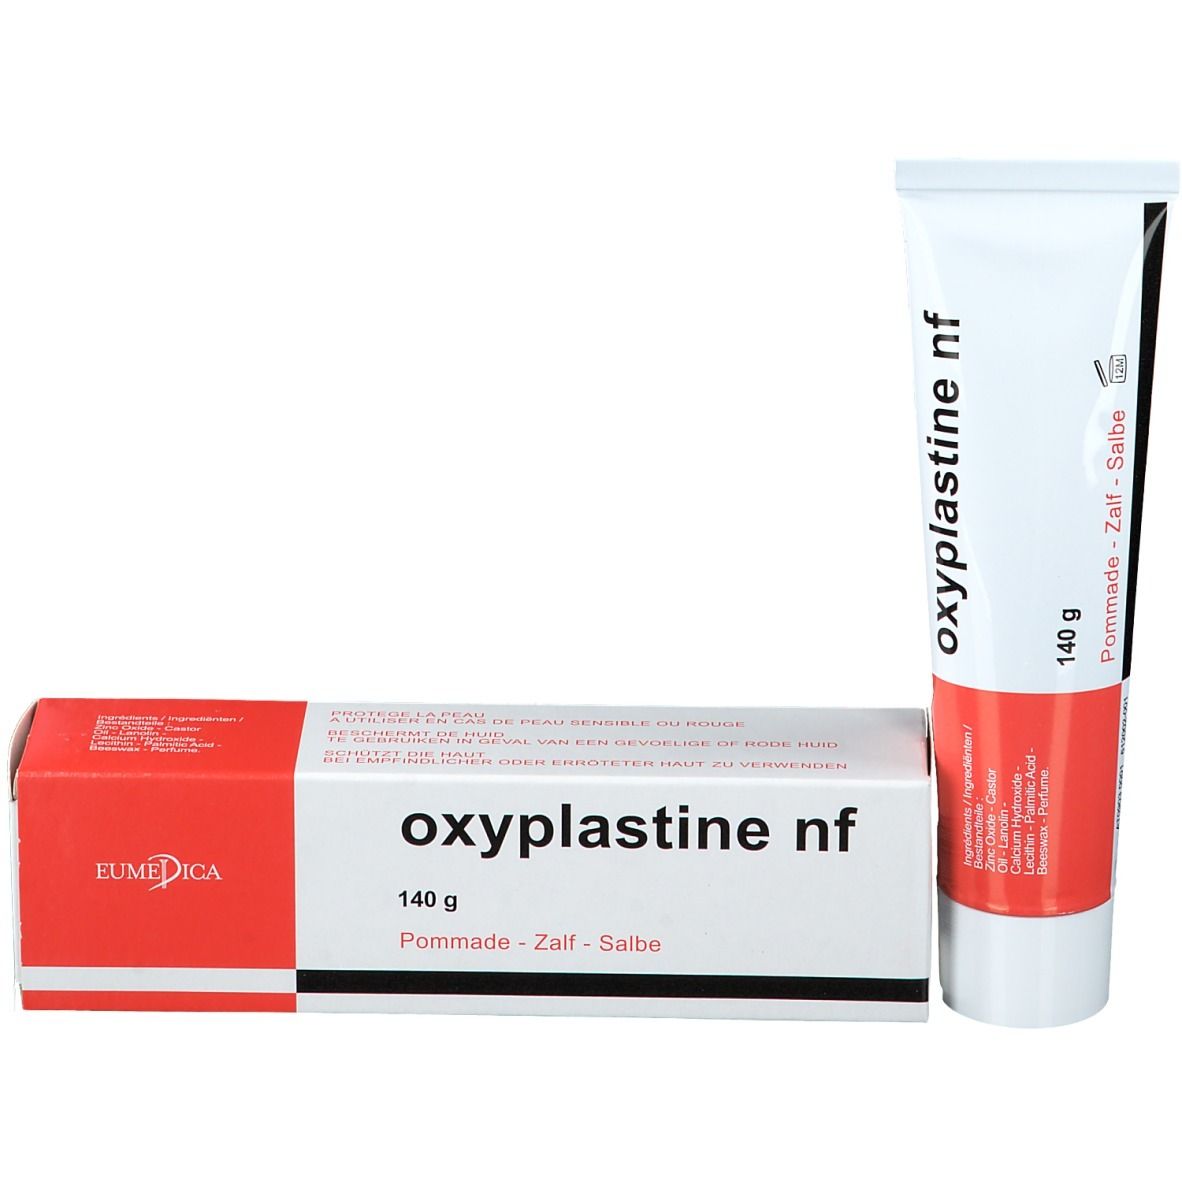 Oxyplastine